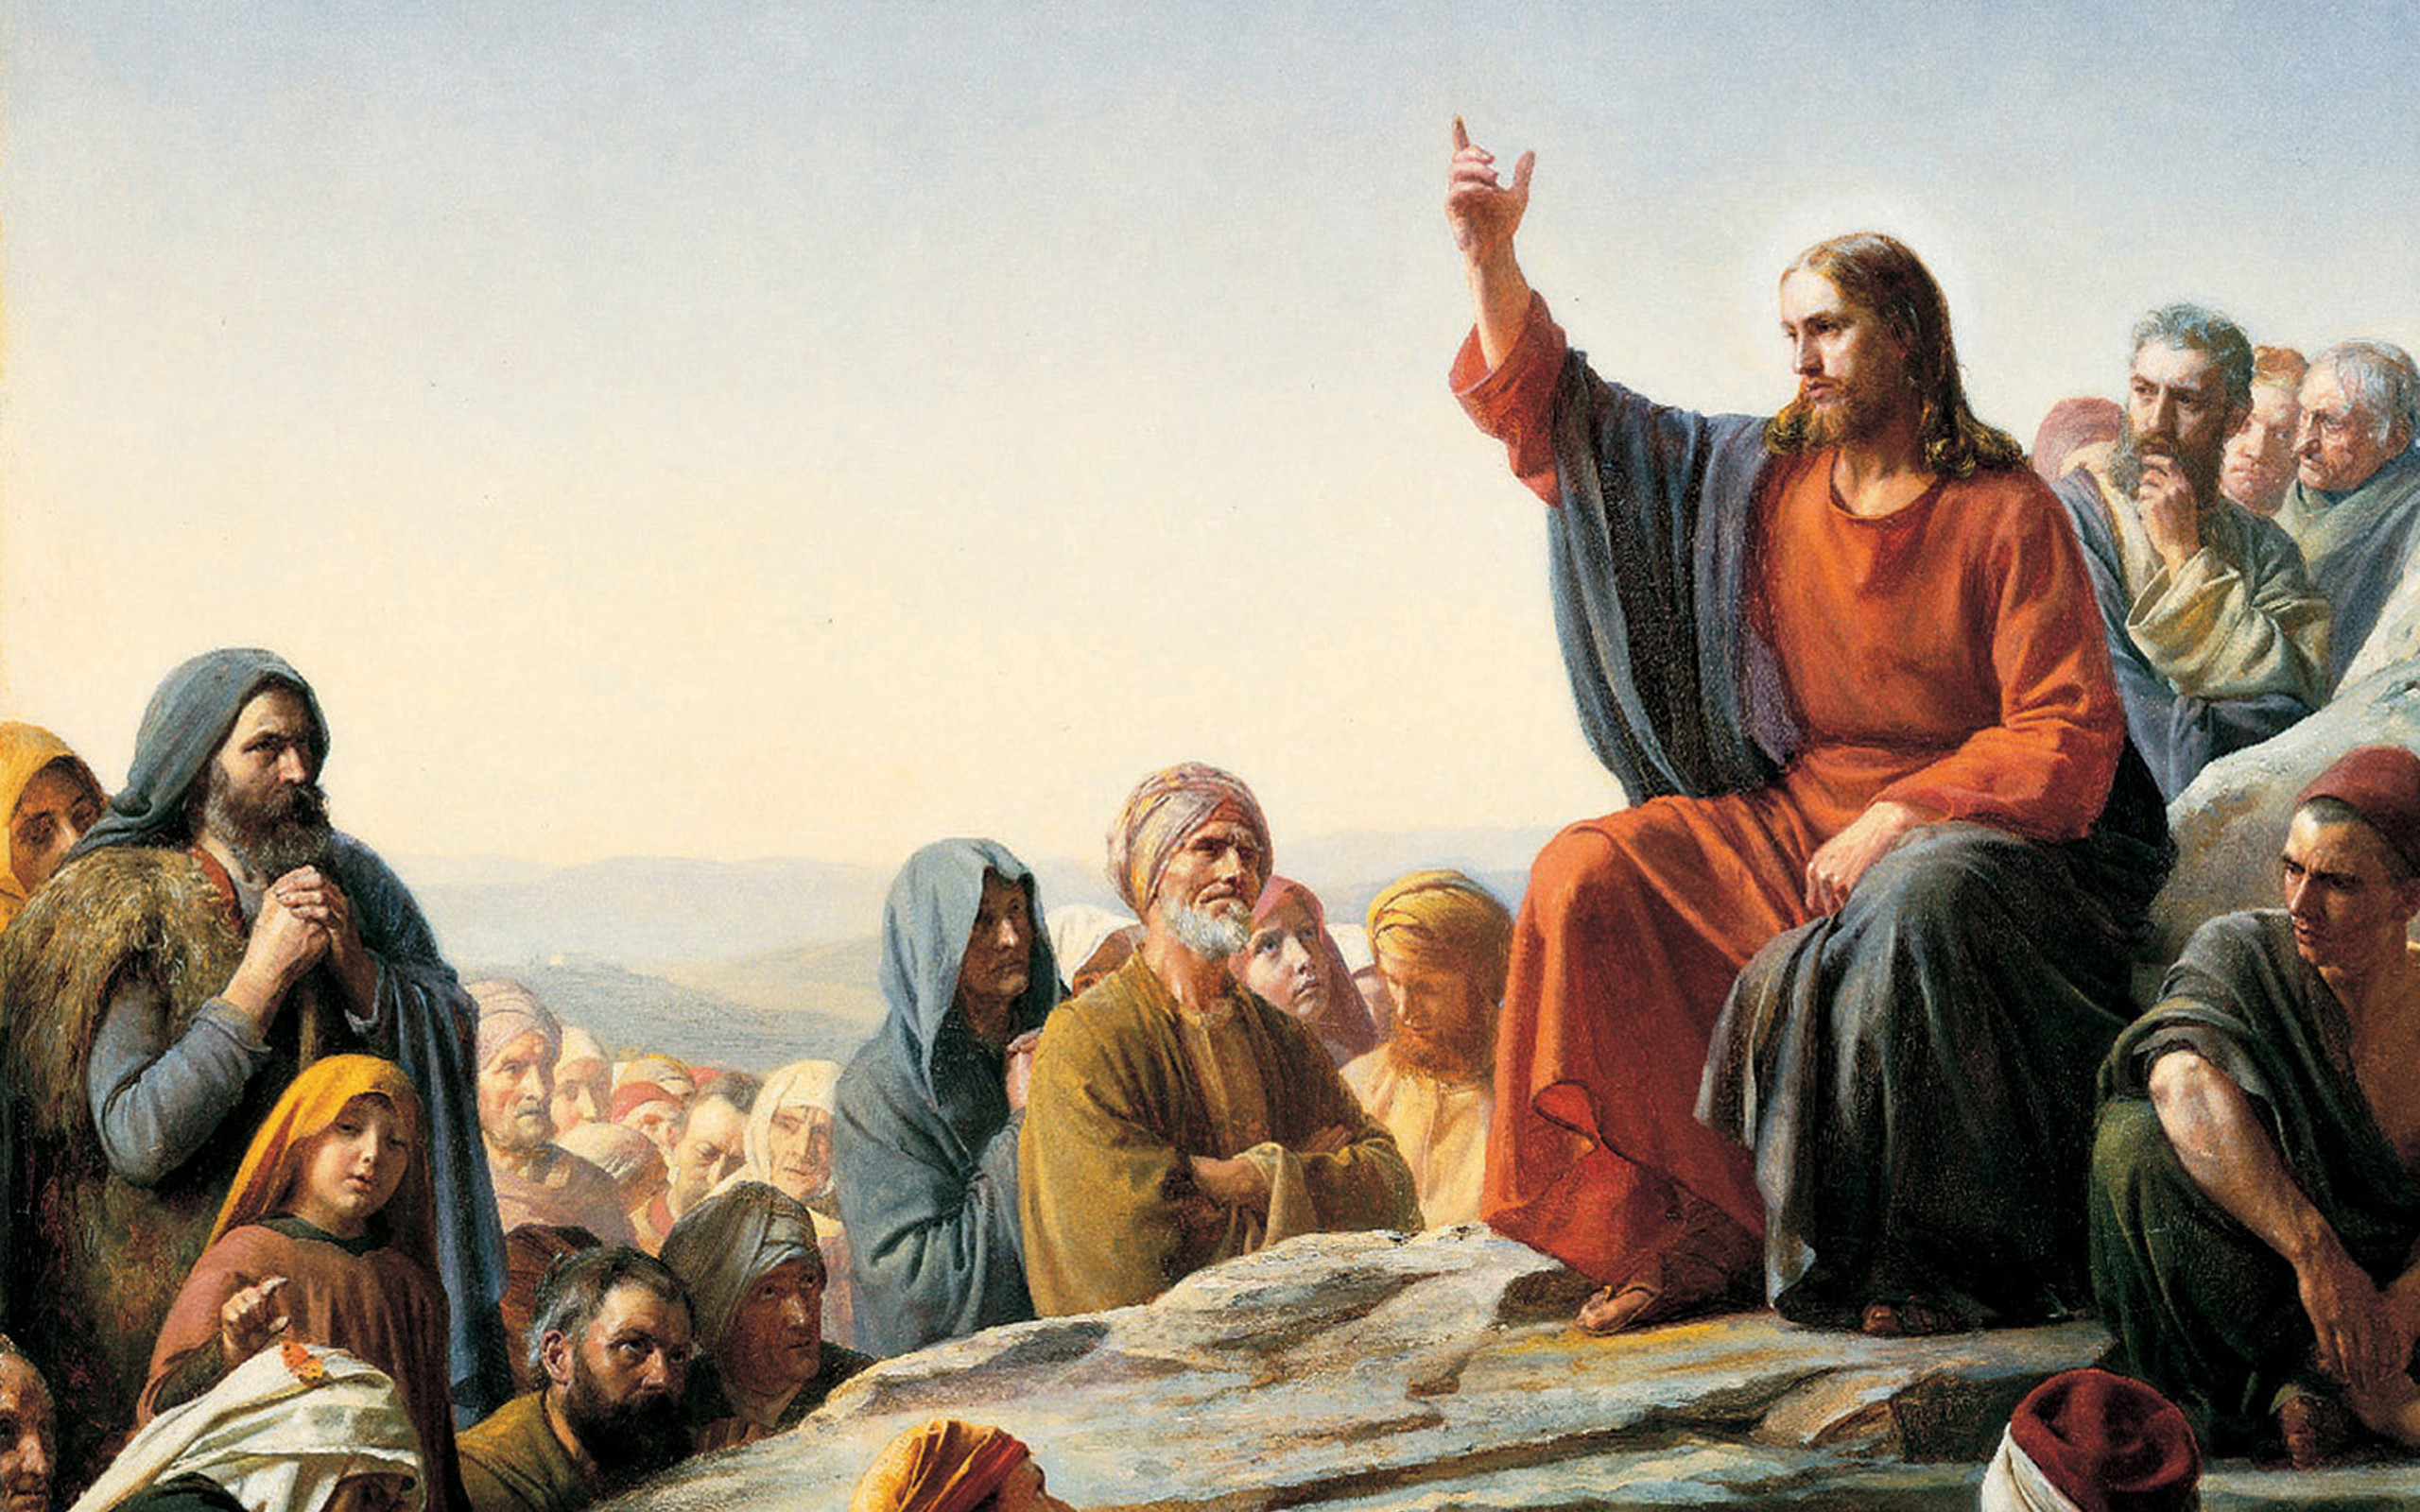 2560x1600 Jesus Christ On Cross | Jesus Teaching Multitude Wallpaper Download this  free Christian image .